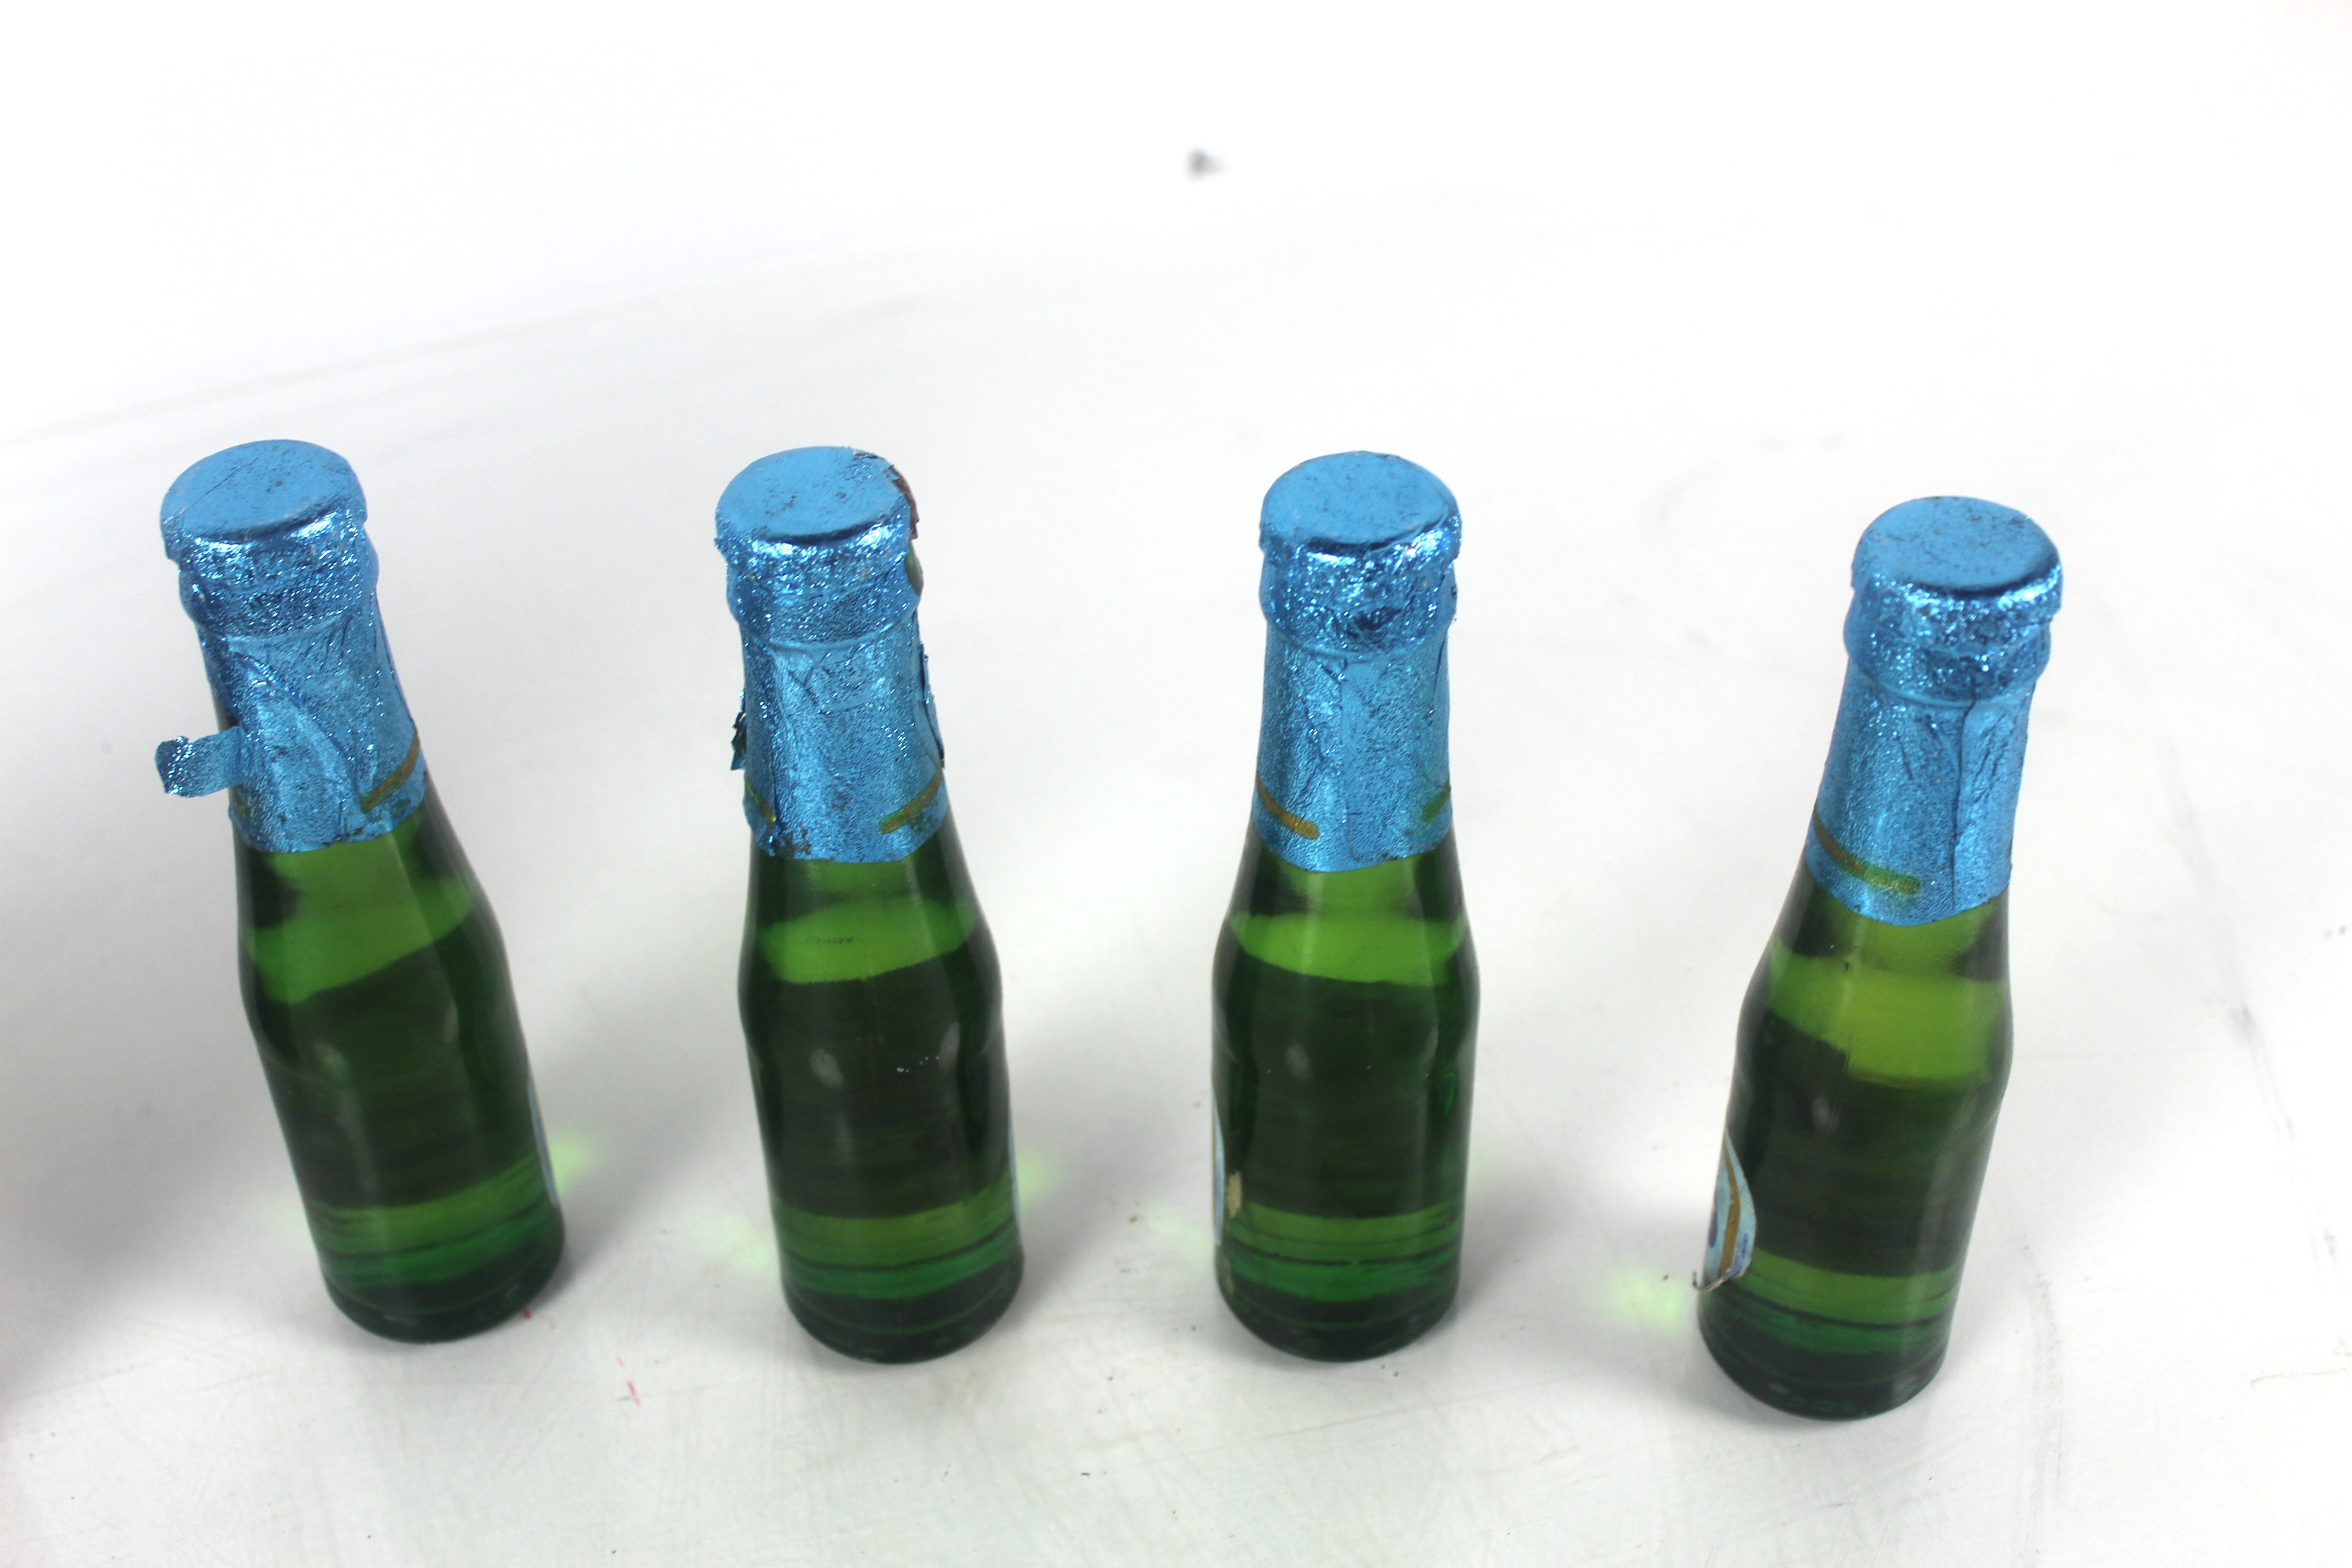 Four bottles of Babycham, one bottle of Haig Whisk - Image 5 of 5